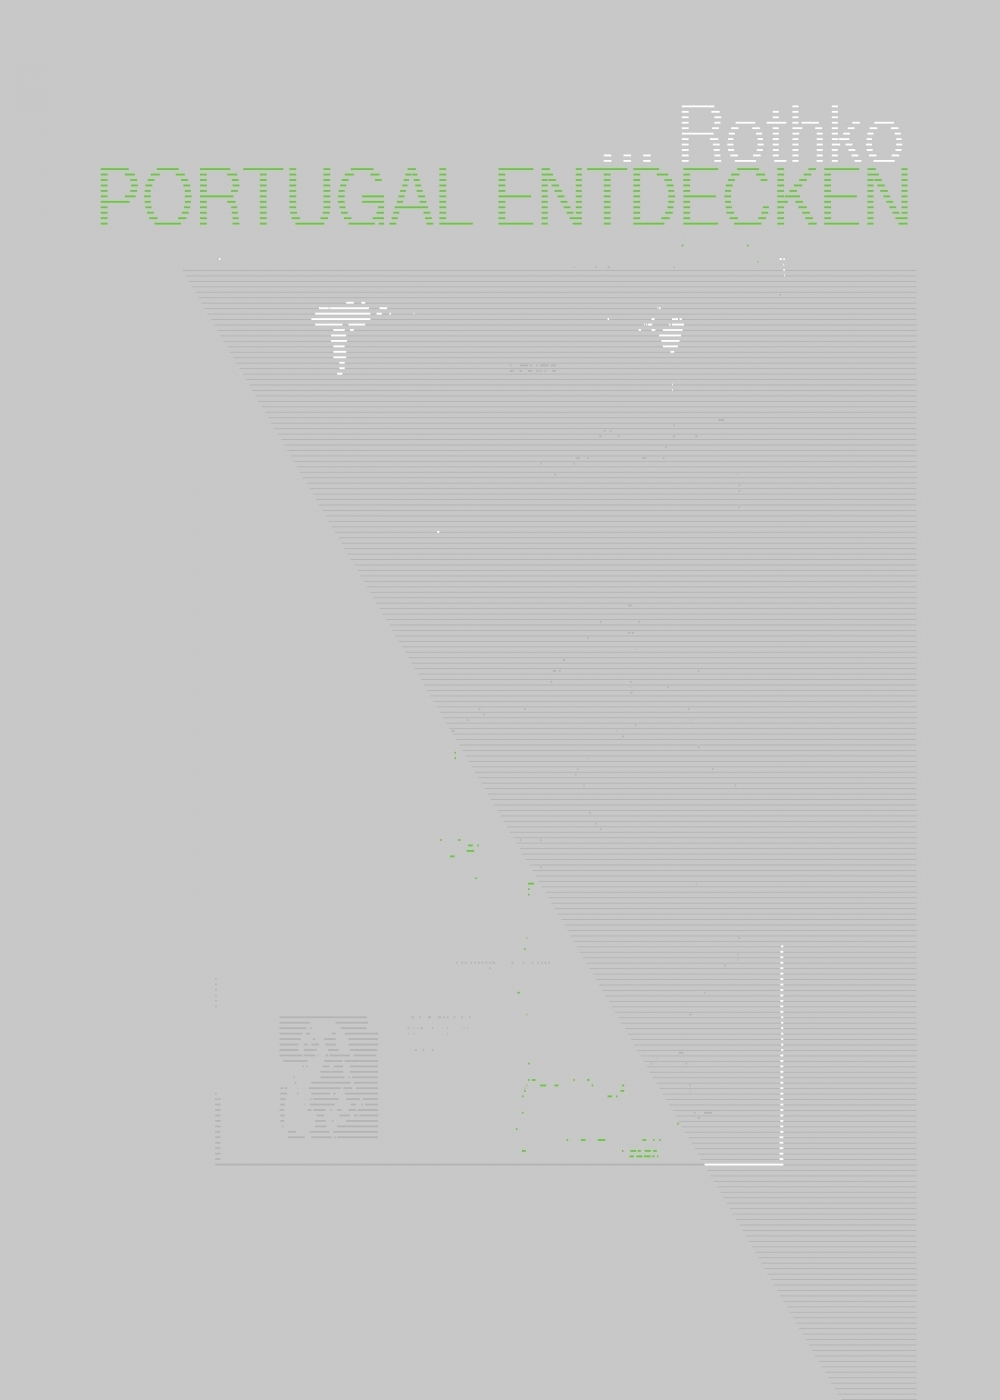 working title - rothko portugal entdecken